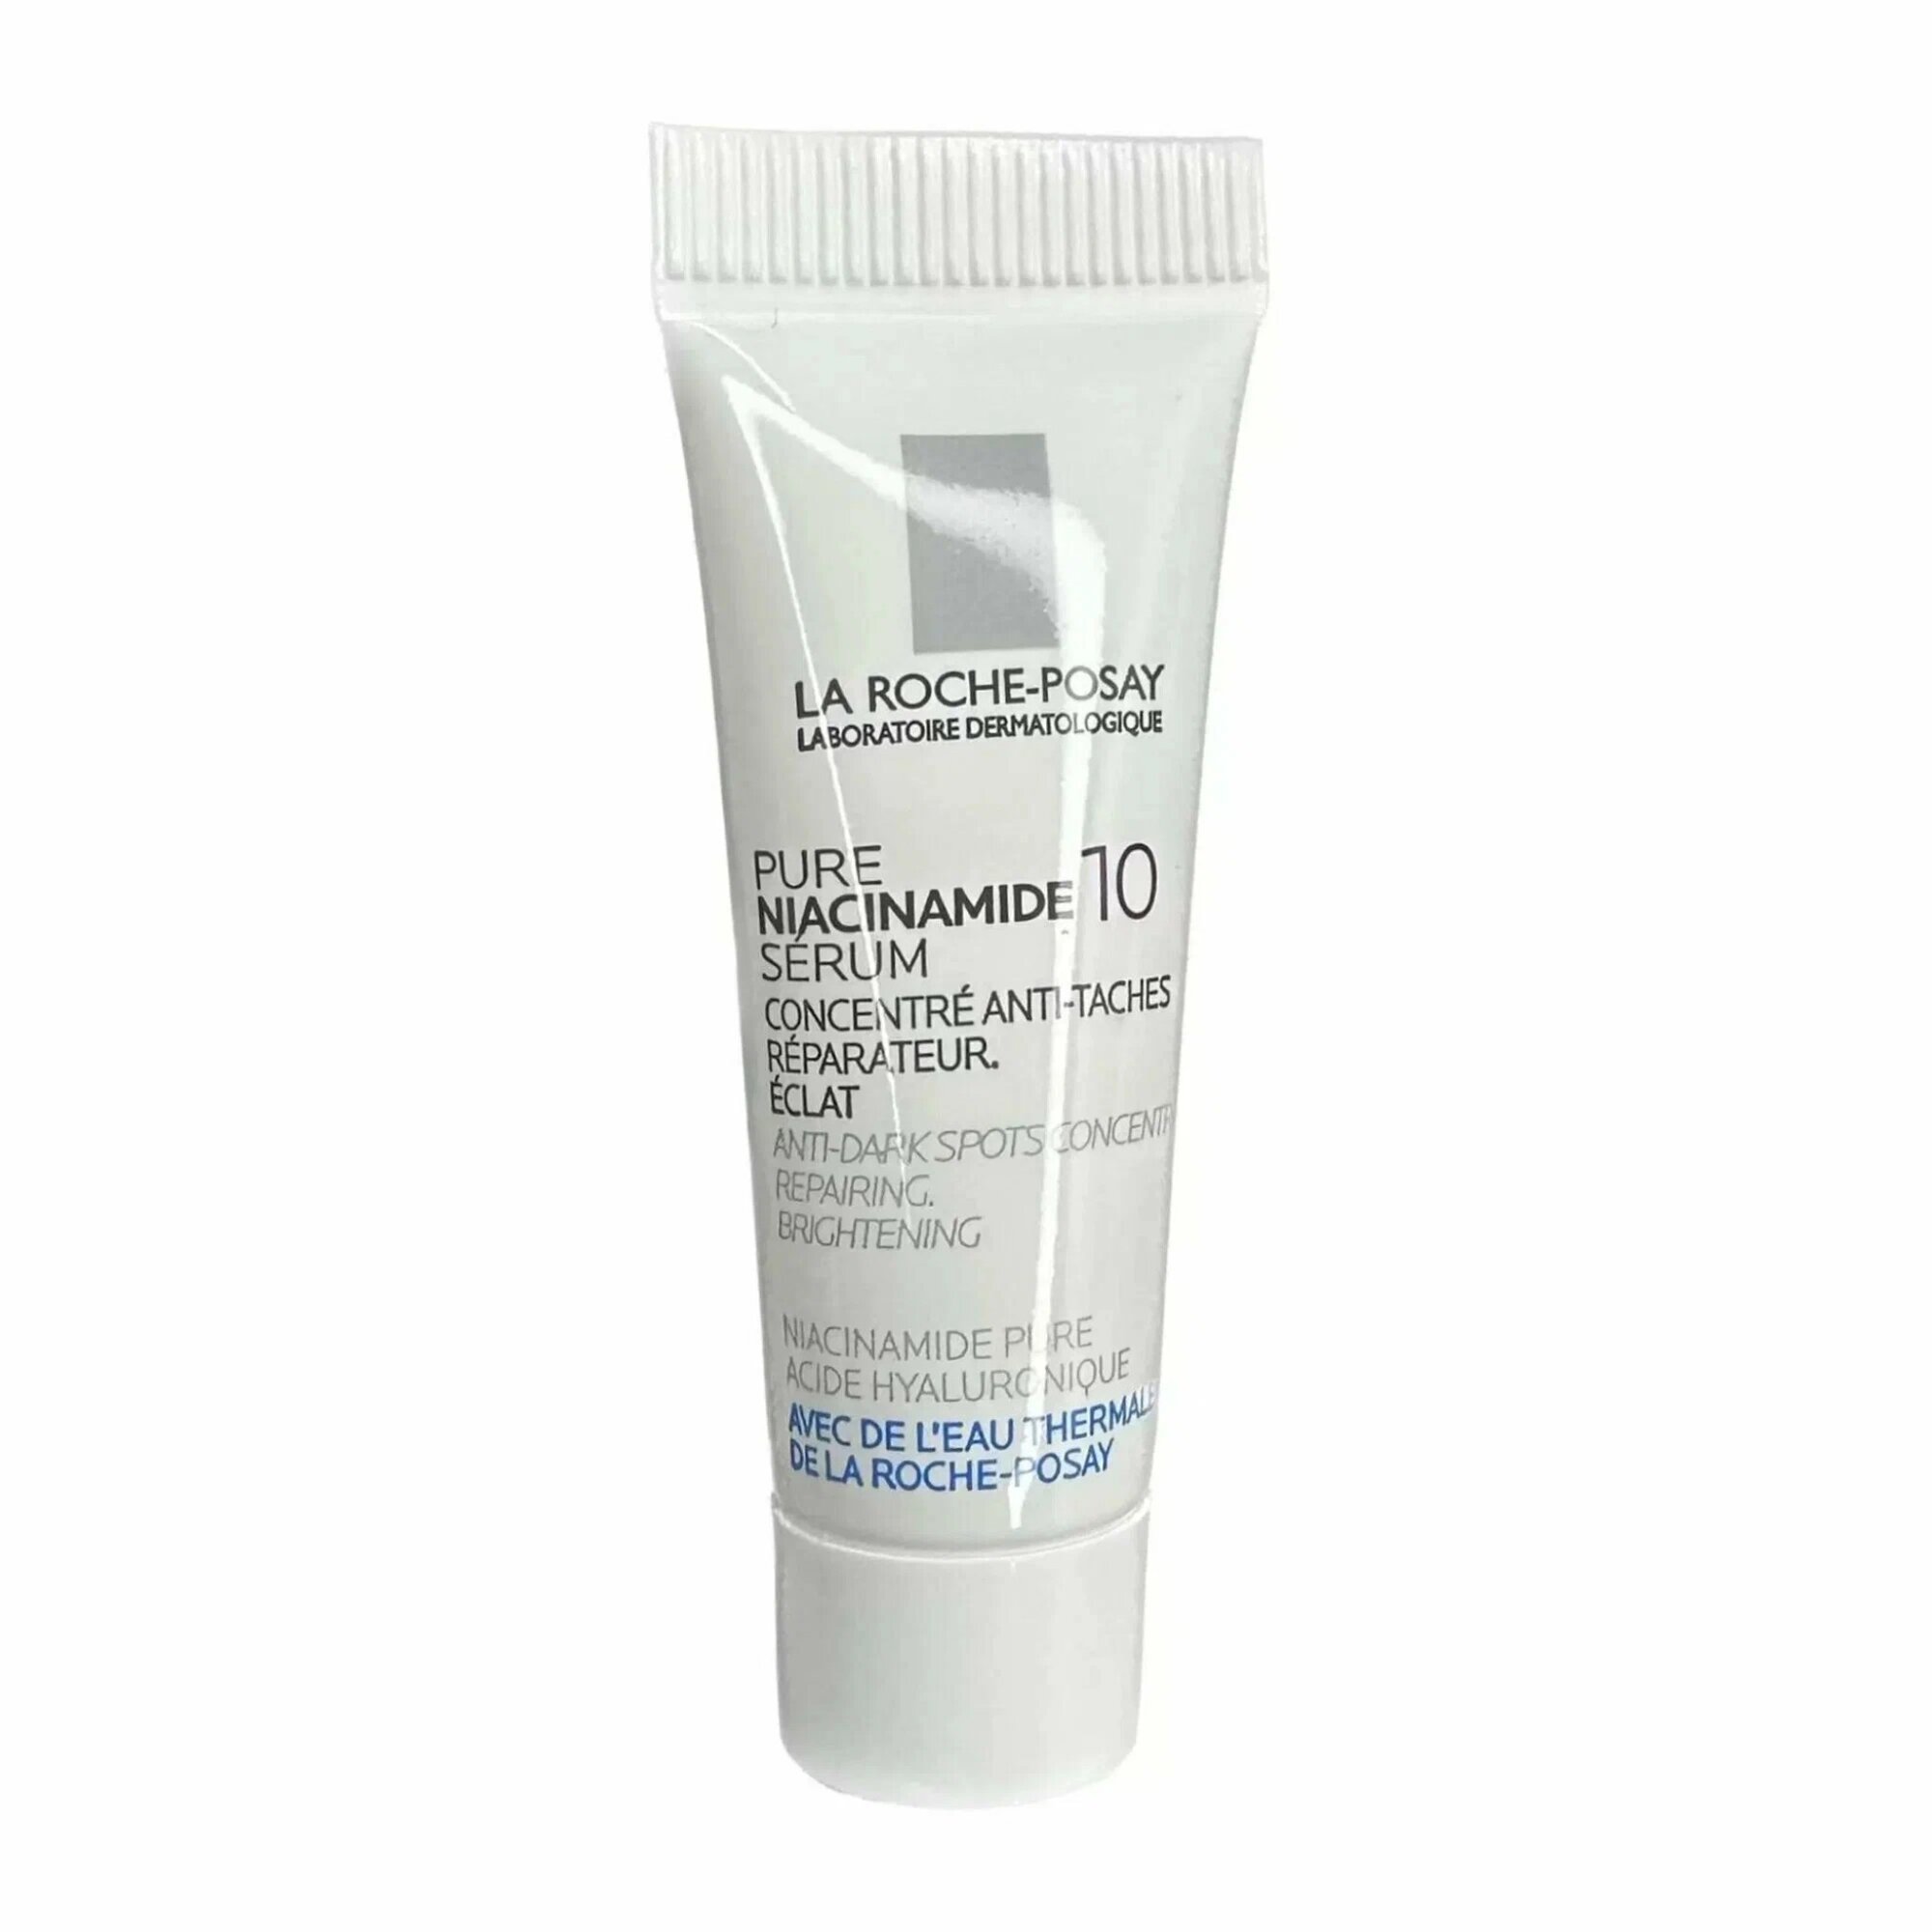 La Roche-Posay Niacinamide 10 Сыворотка для лица осветляющая с 10% ниацинамида, 3 мл